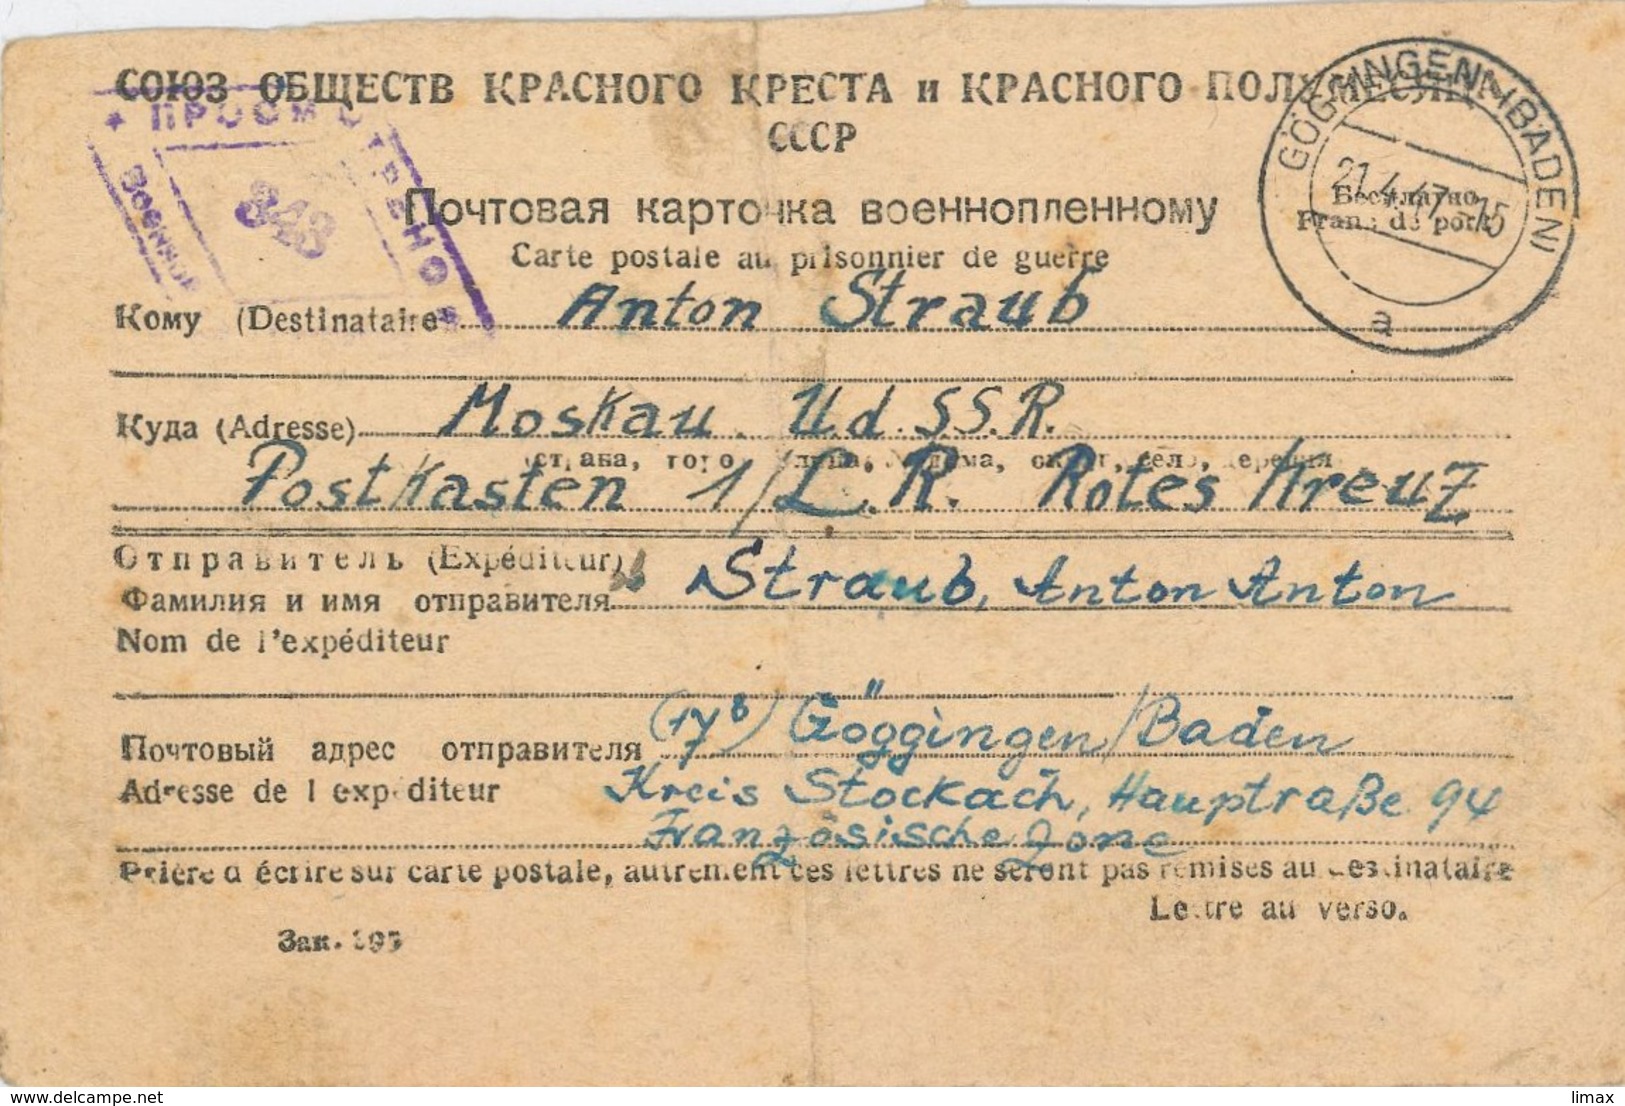 Göggingen Baden - Kriegsgefangenenpost Via Rotes Kreuz An Lager 343 Pleskau (heute Pskow) 1947 - Prisoners Of War Mail